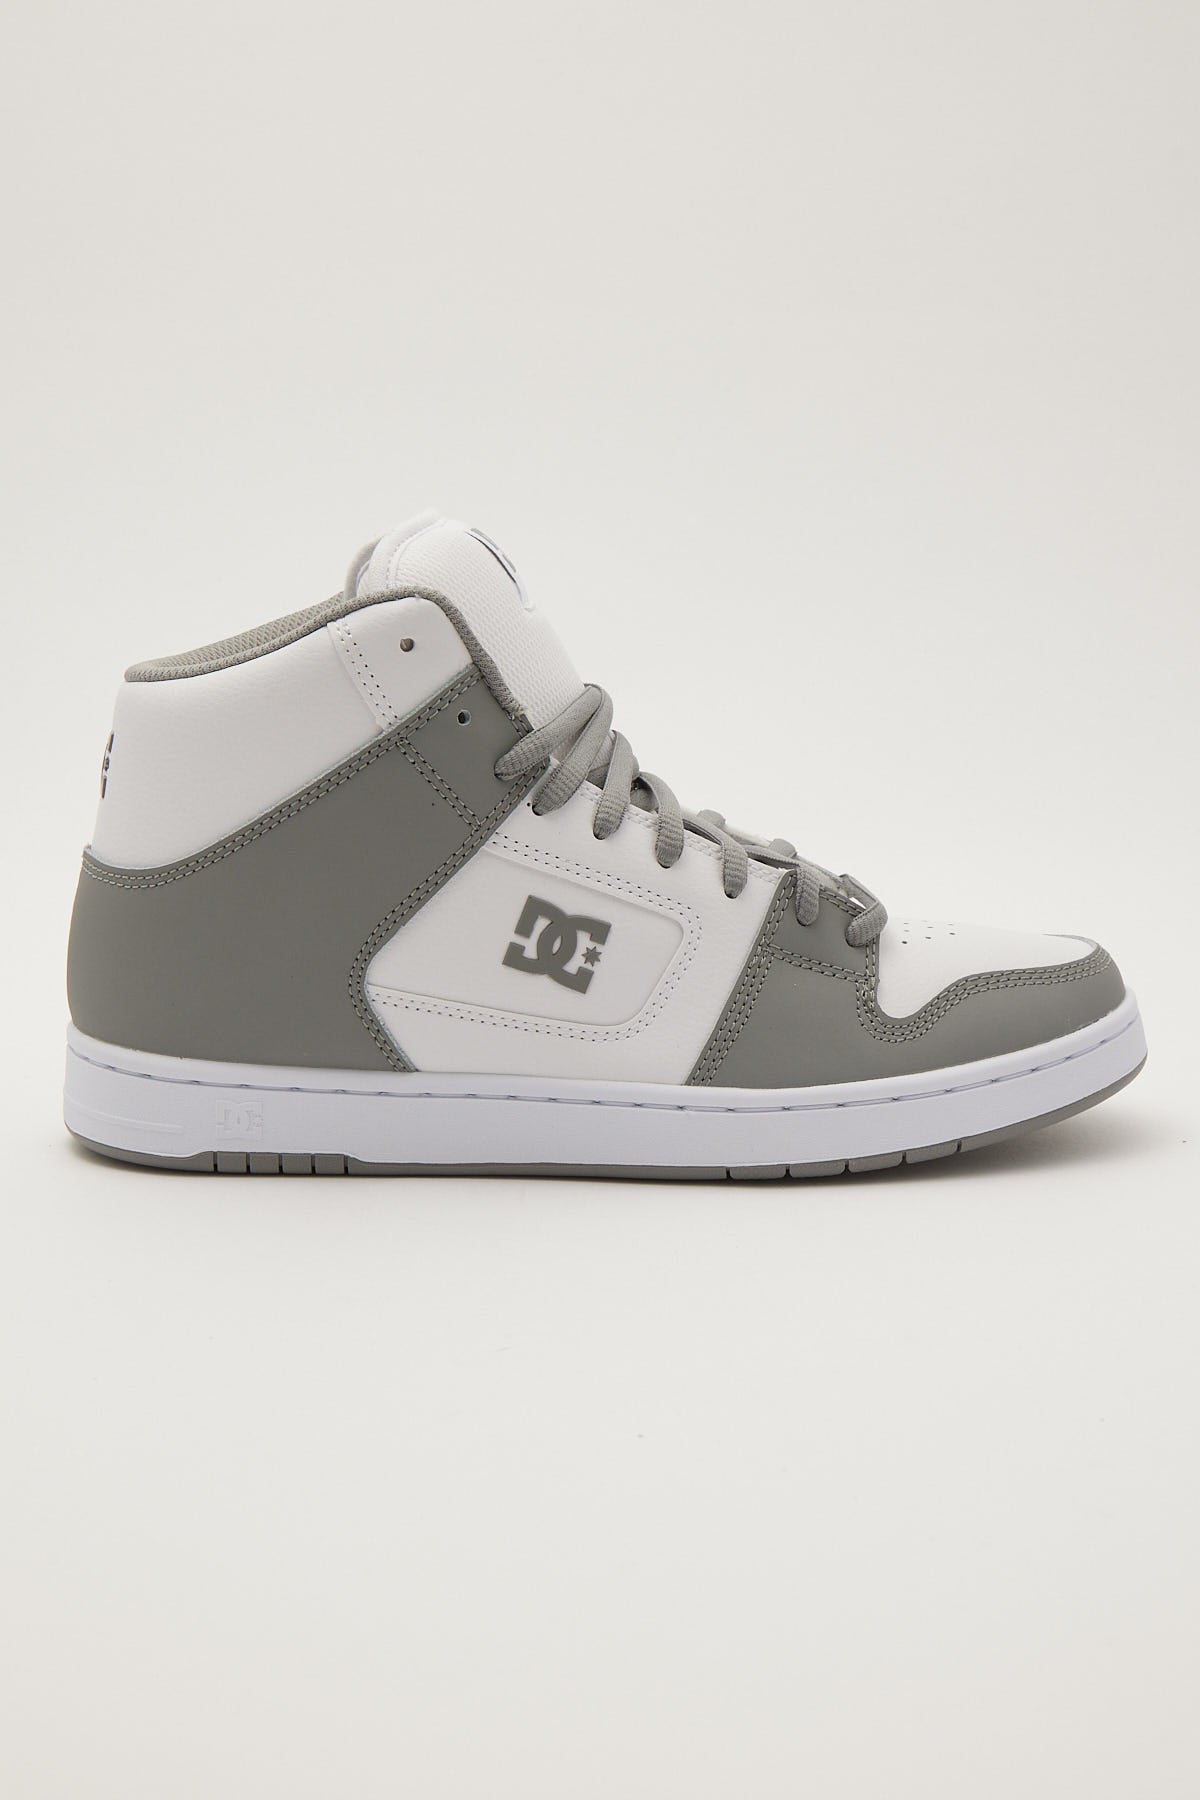 Dc Shoes Manteca 4 Hi White/Grey